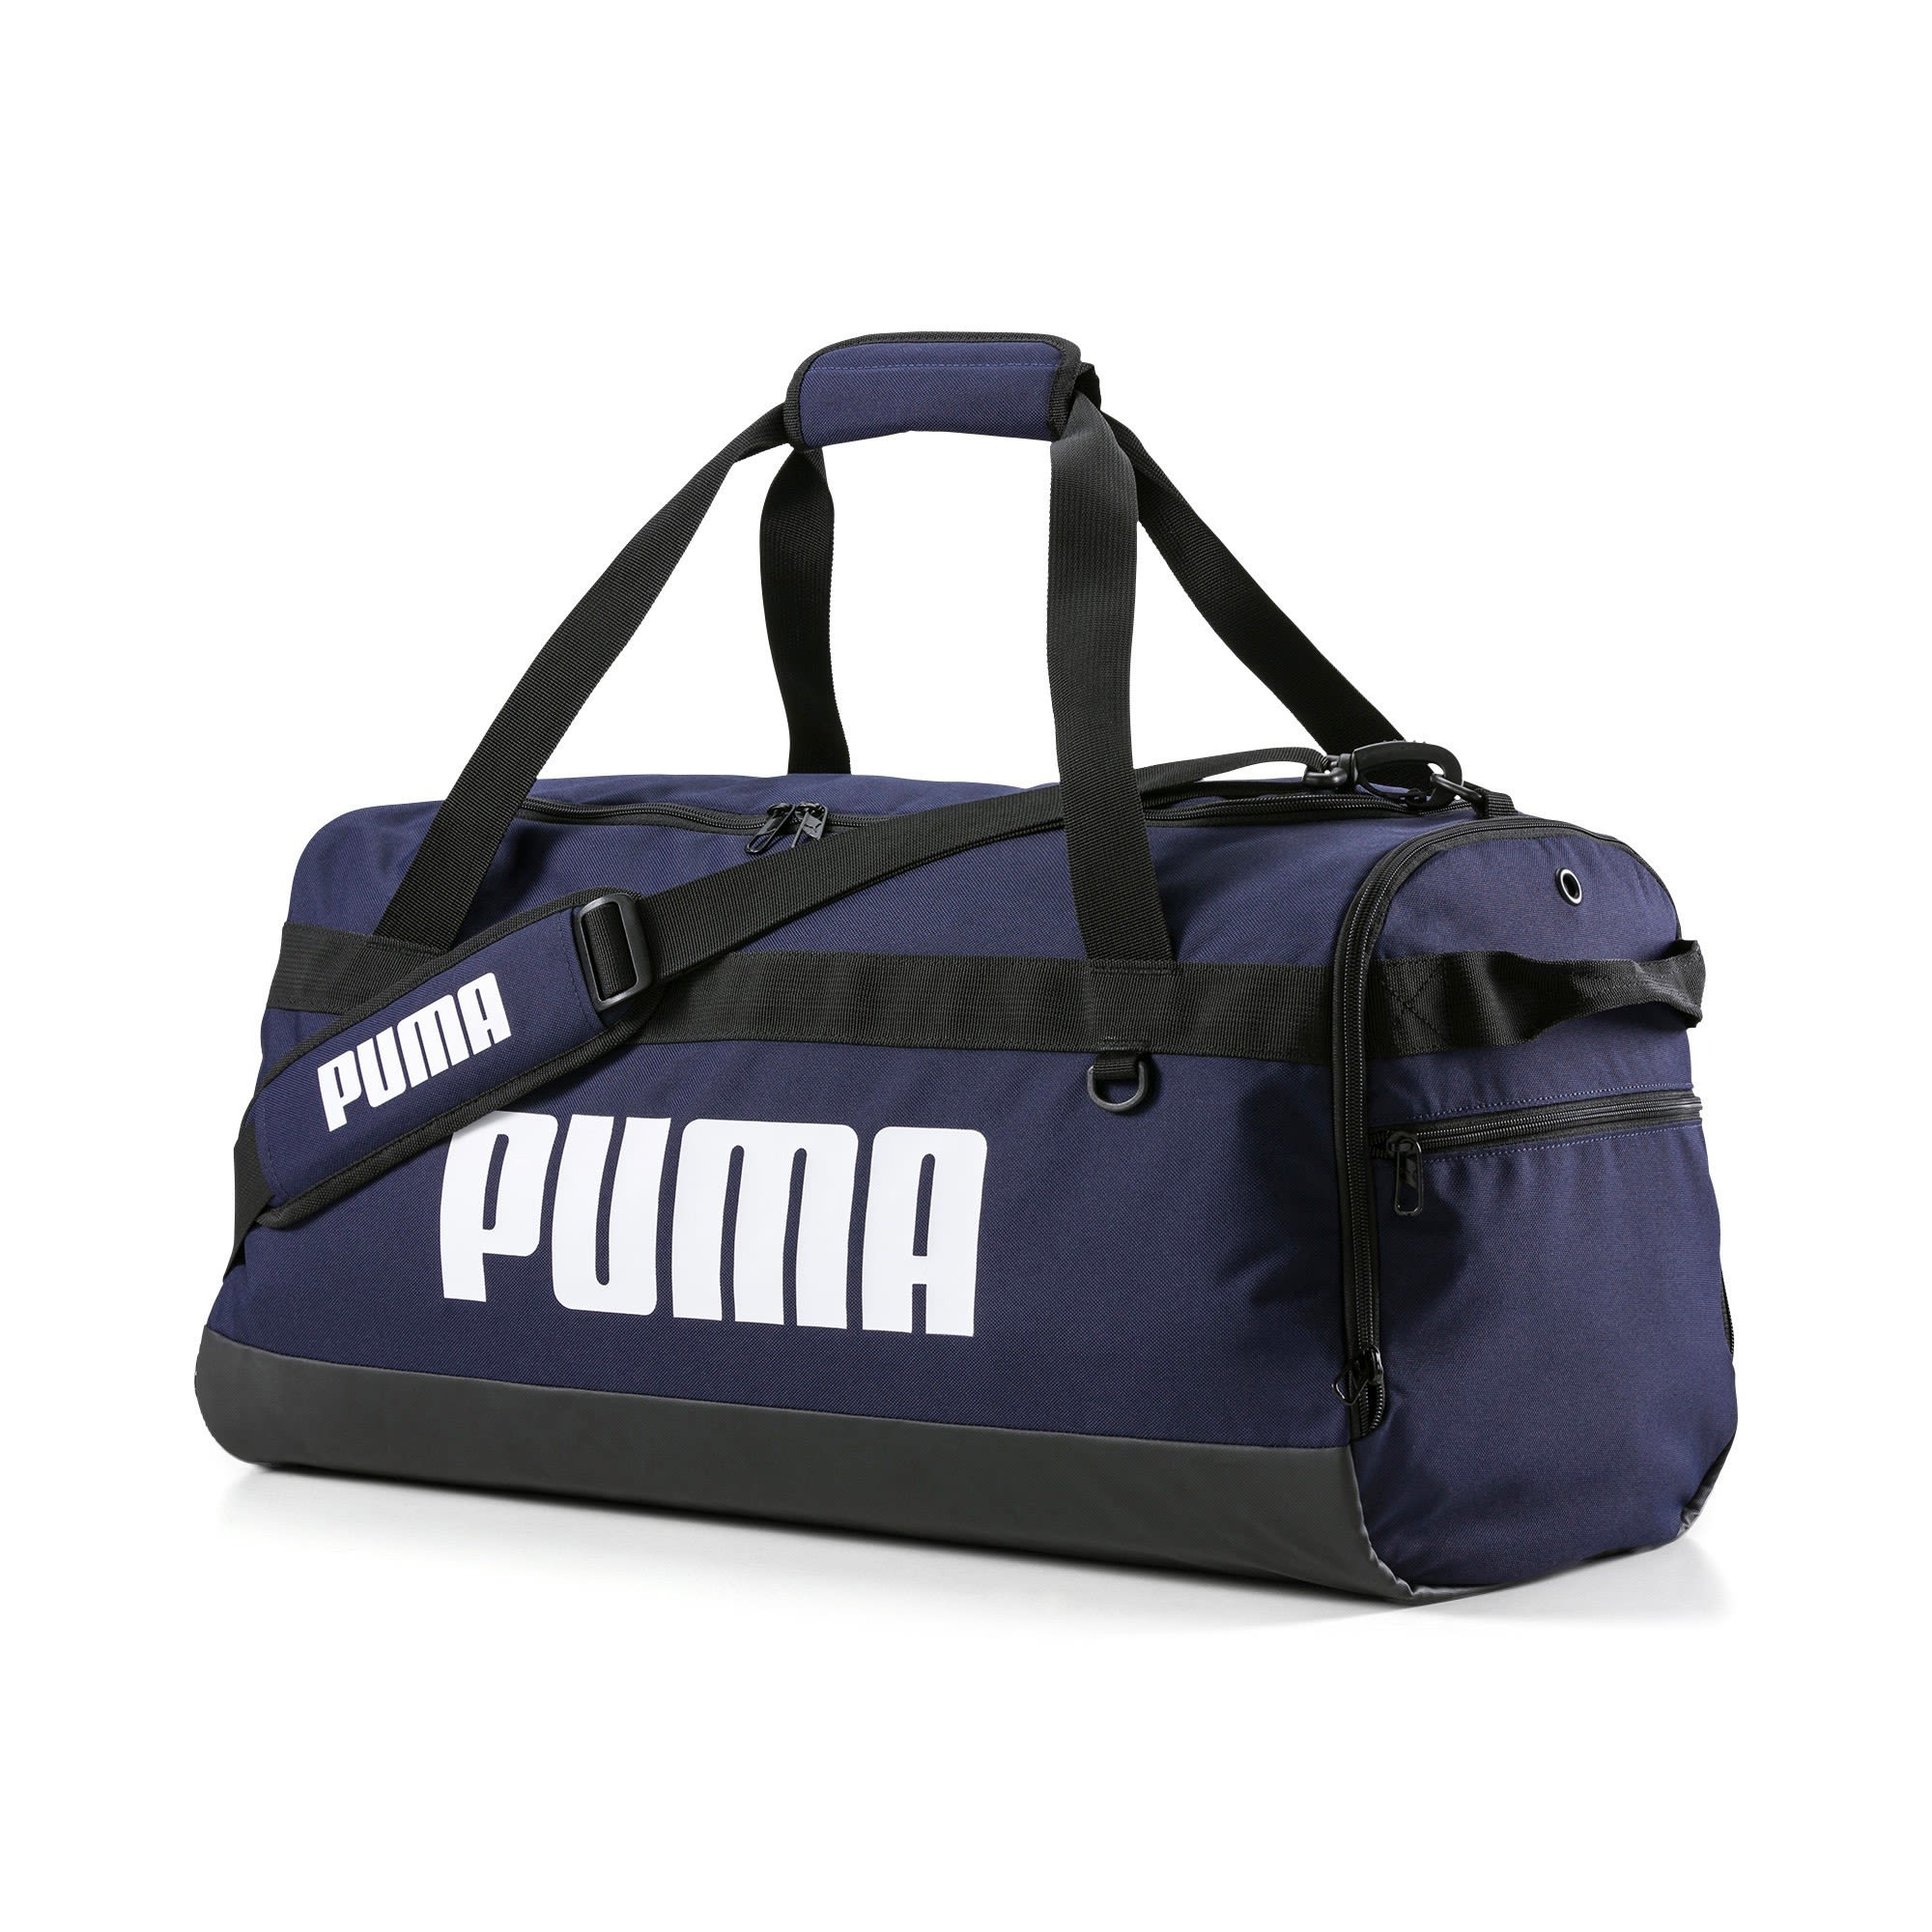 Puma Challenger Duffel Bag Blau- Sporttaschen- Grsse 58l - Farbe Peacoat